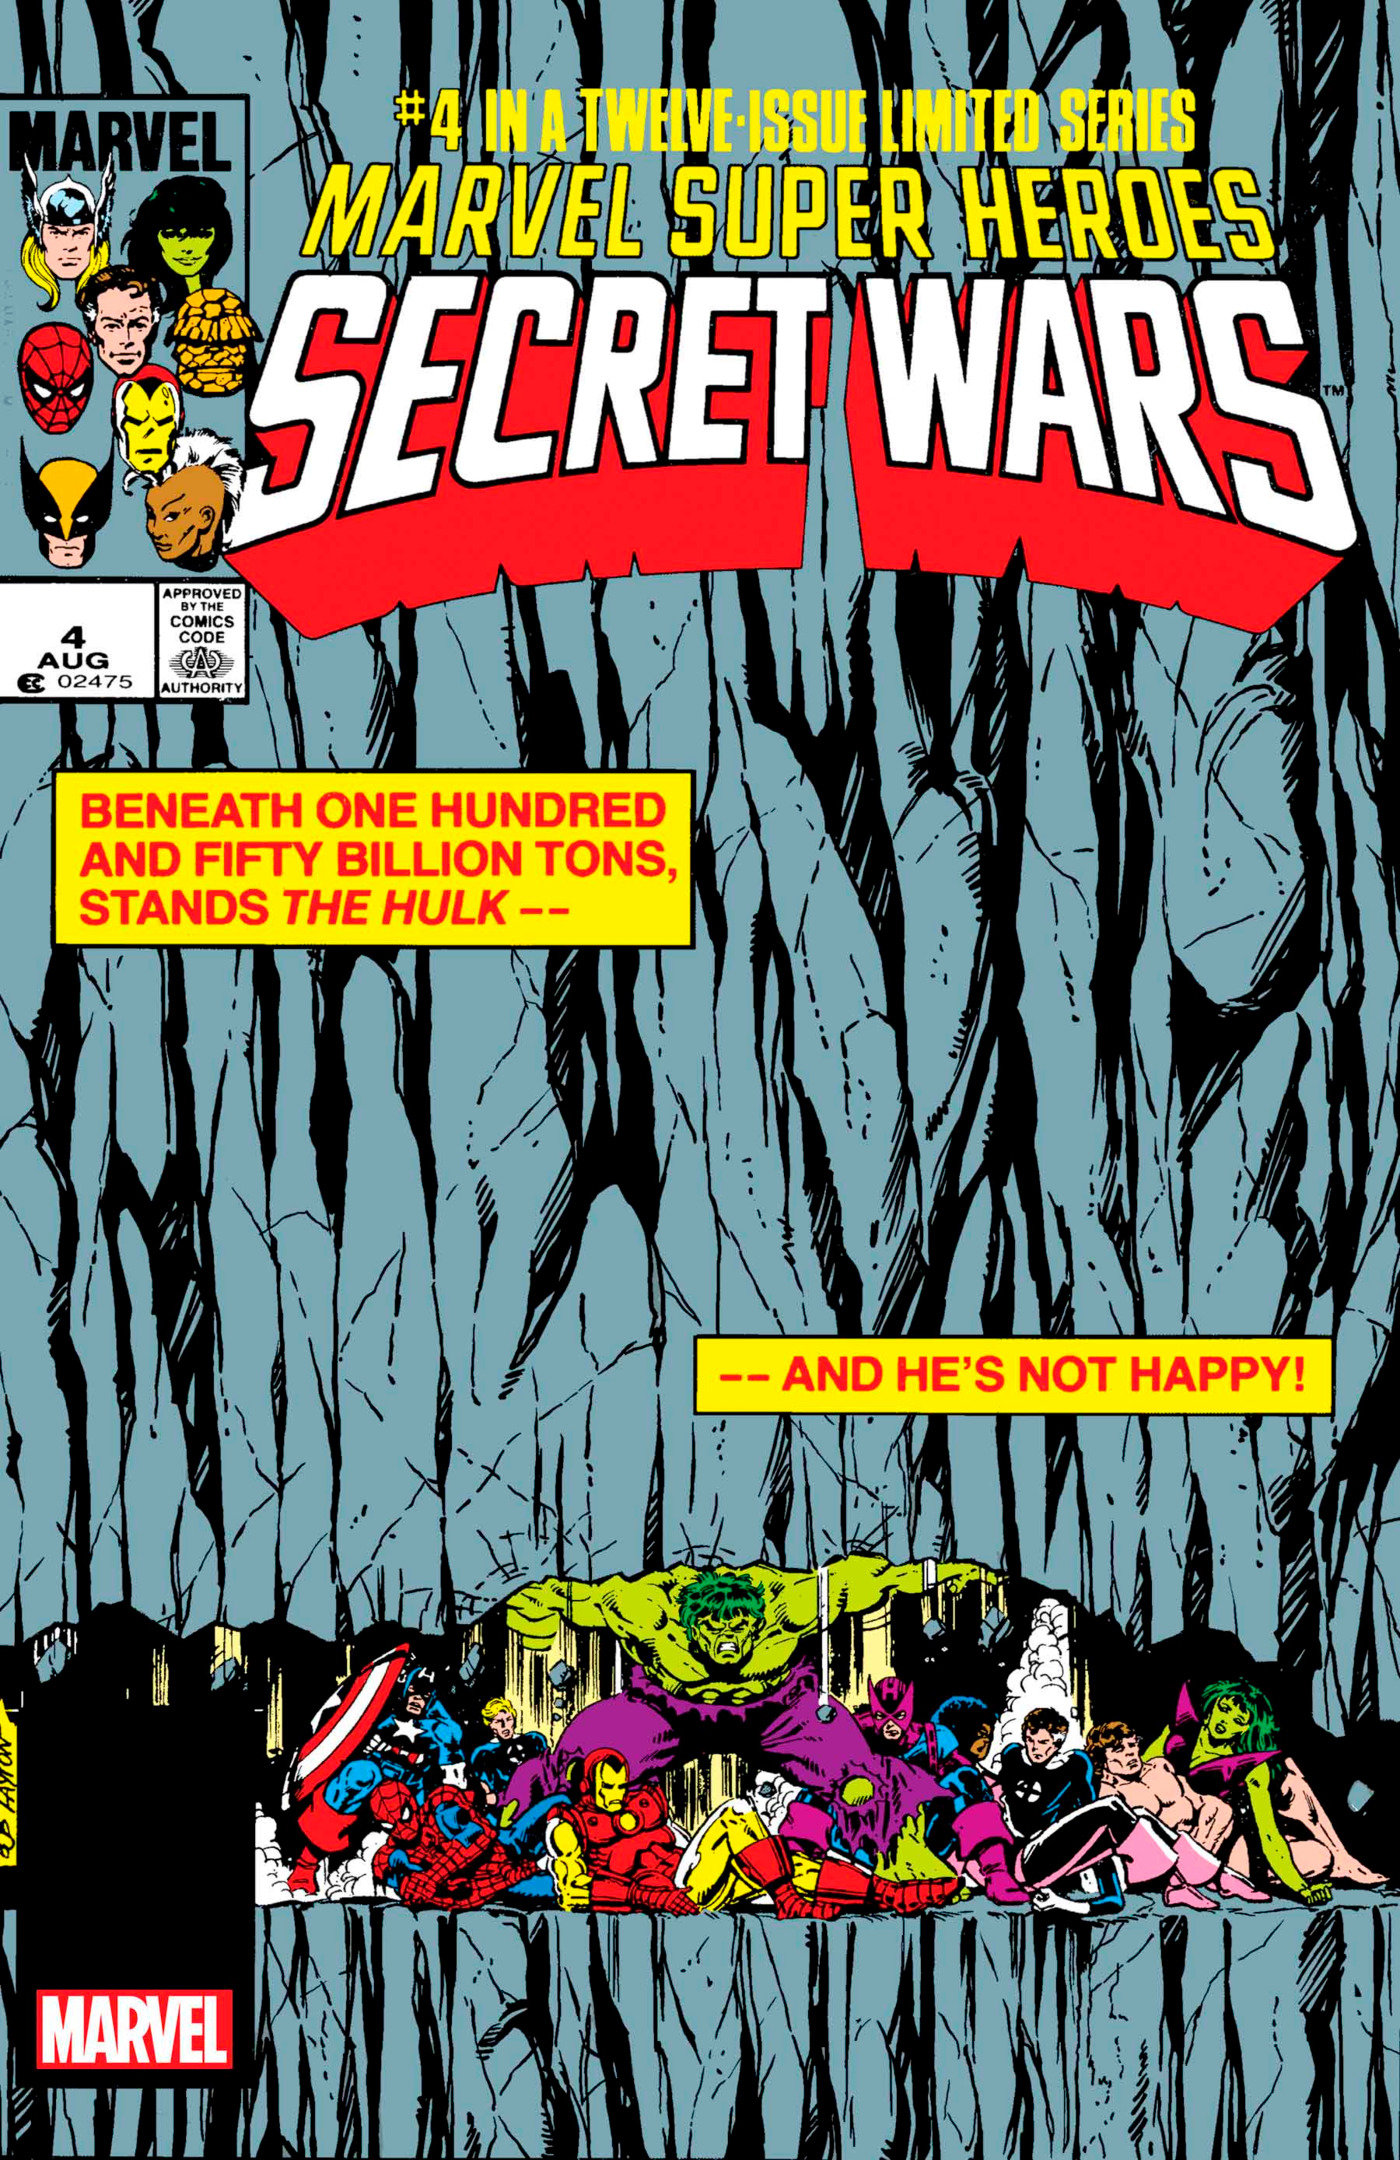 Marvel Super Heroes Secret Wars Facsimile #4